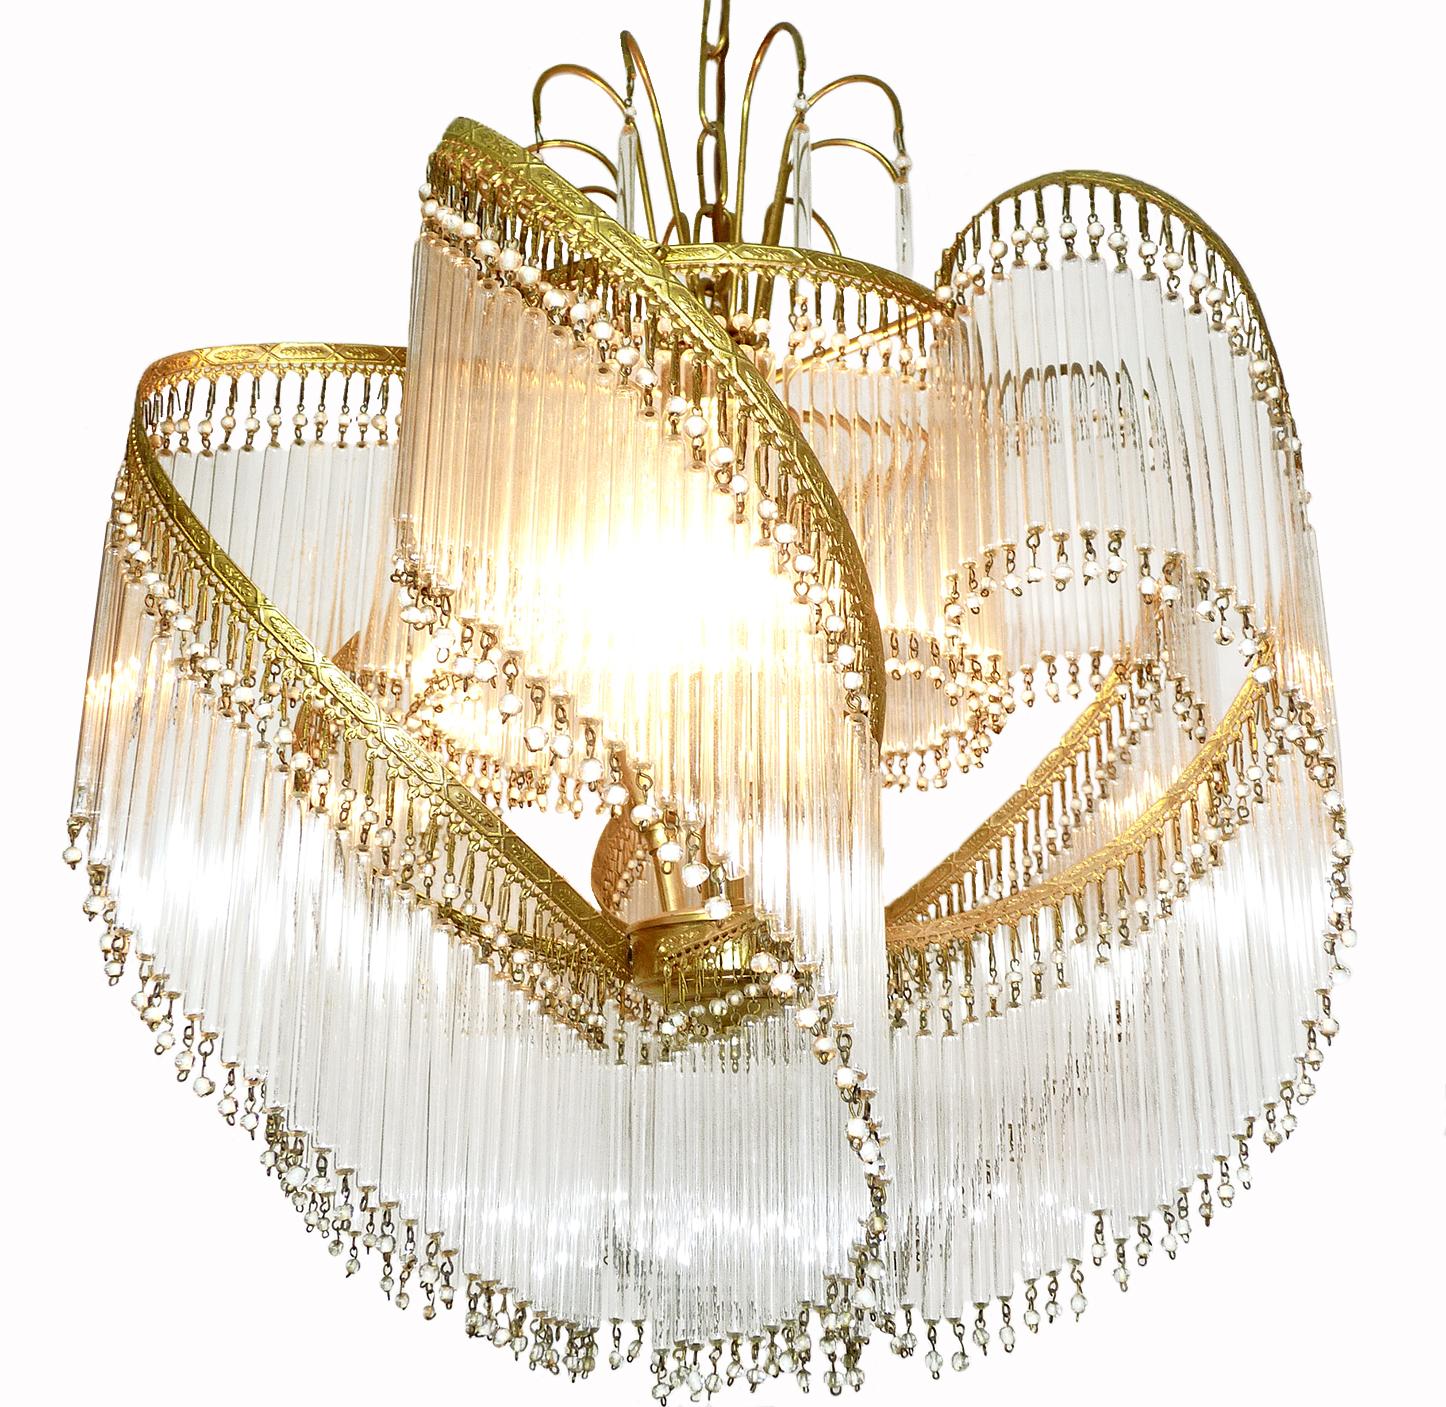 French Art Deco and Art Nouveau Crystal Glass Fringe Hollywood Regency Gilt Chandelier